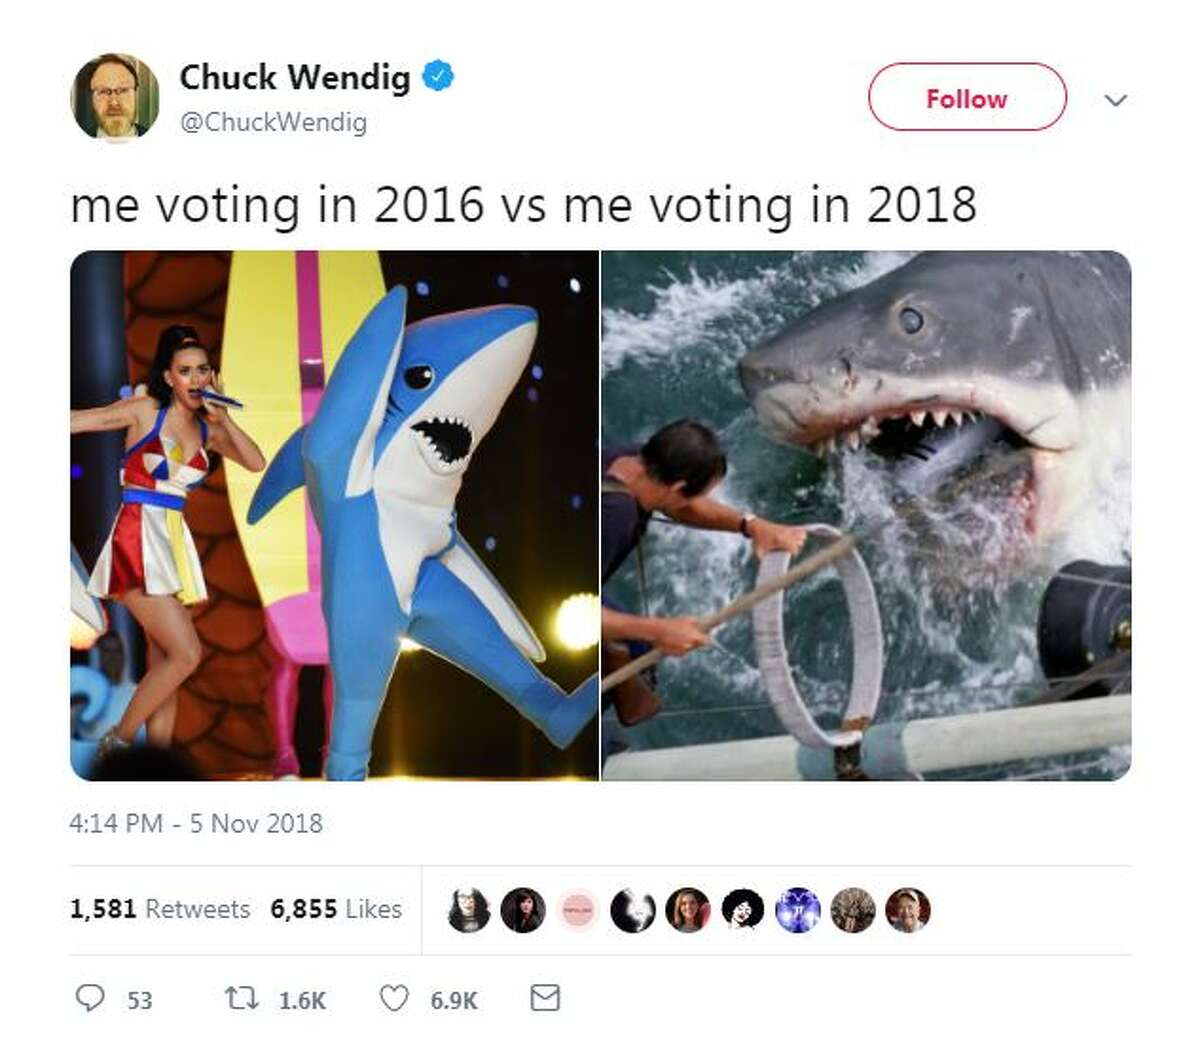 @ChuckWendig: "me voting in 2016 vs me voting in 2018"